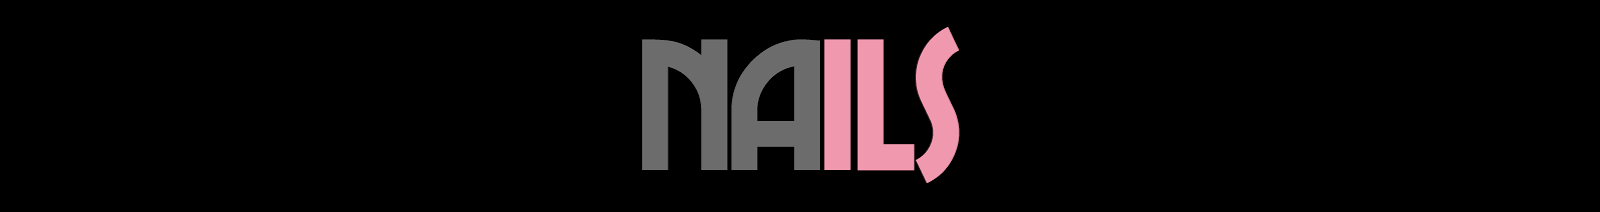 Nails Title